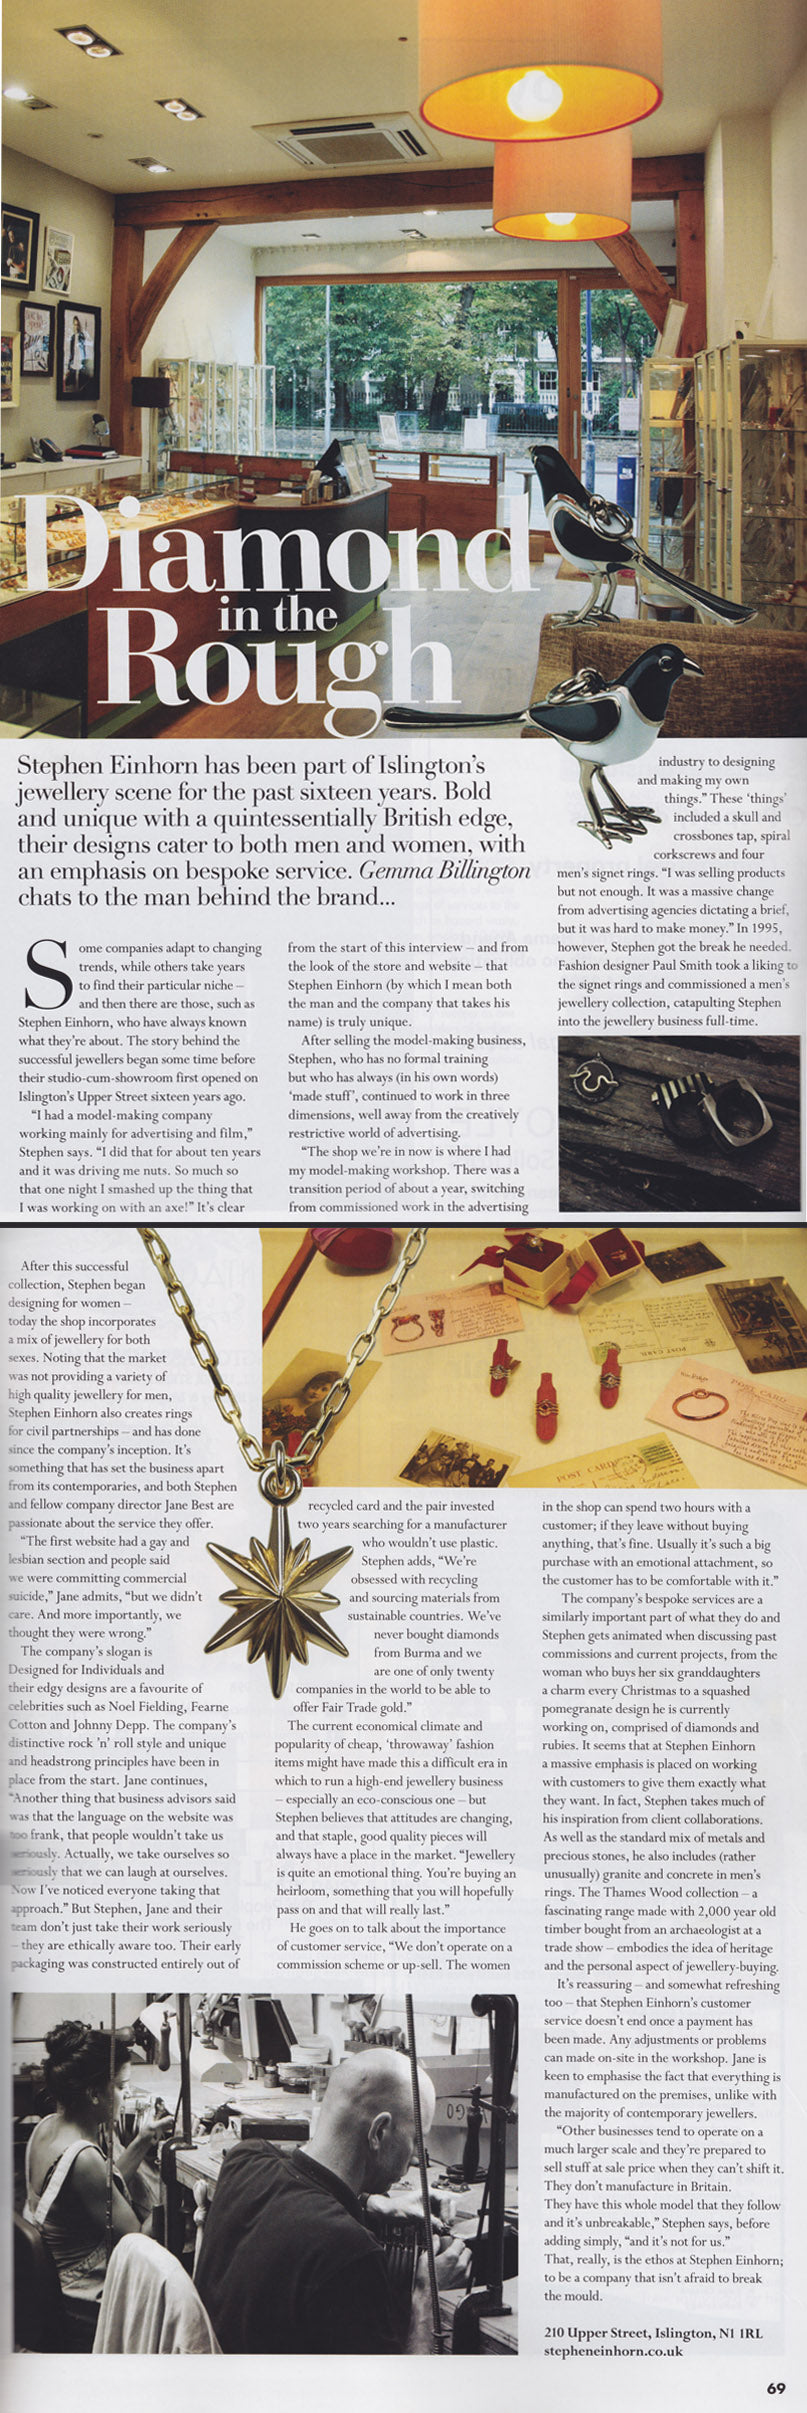 Stephen Einhorn, His Jewellery & London Shop in City & Angel Magazine